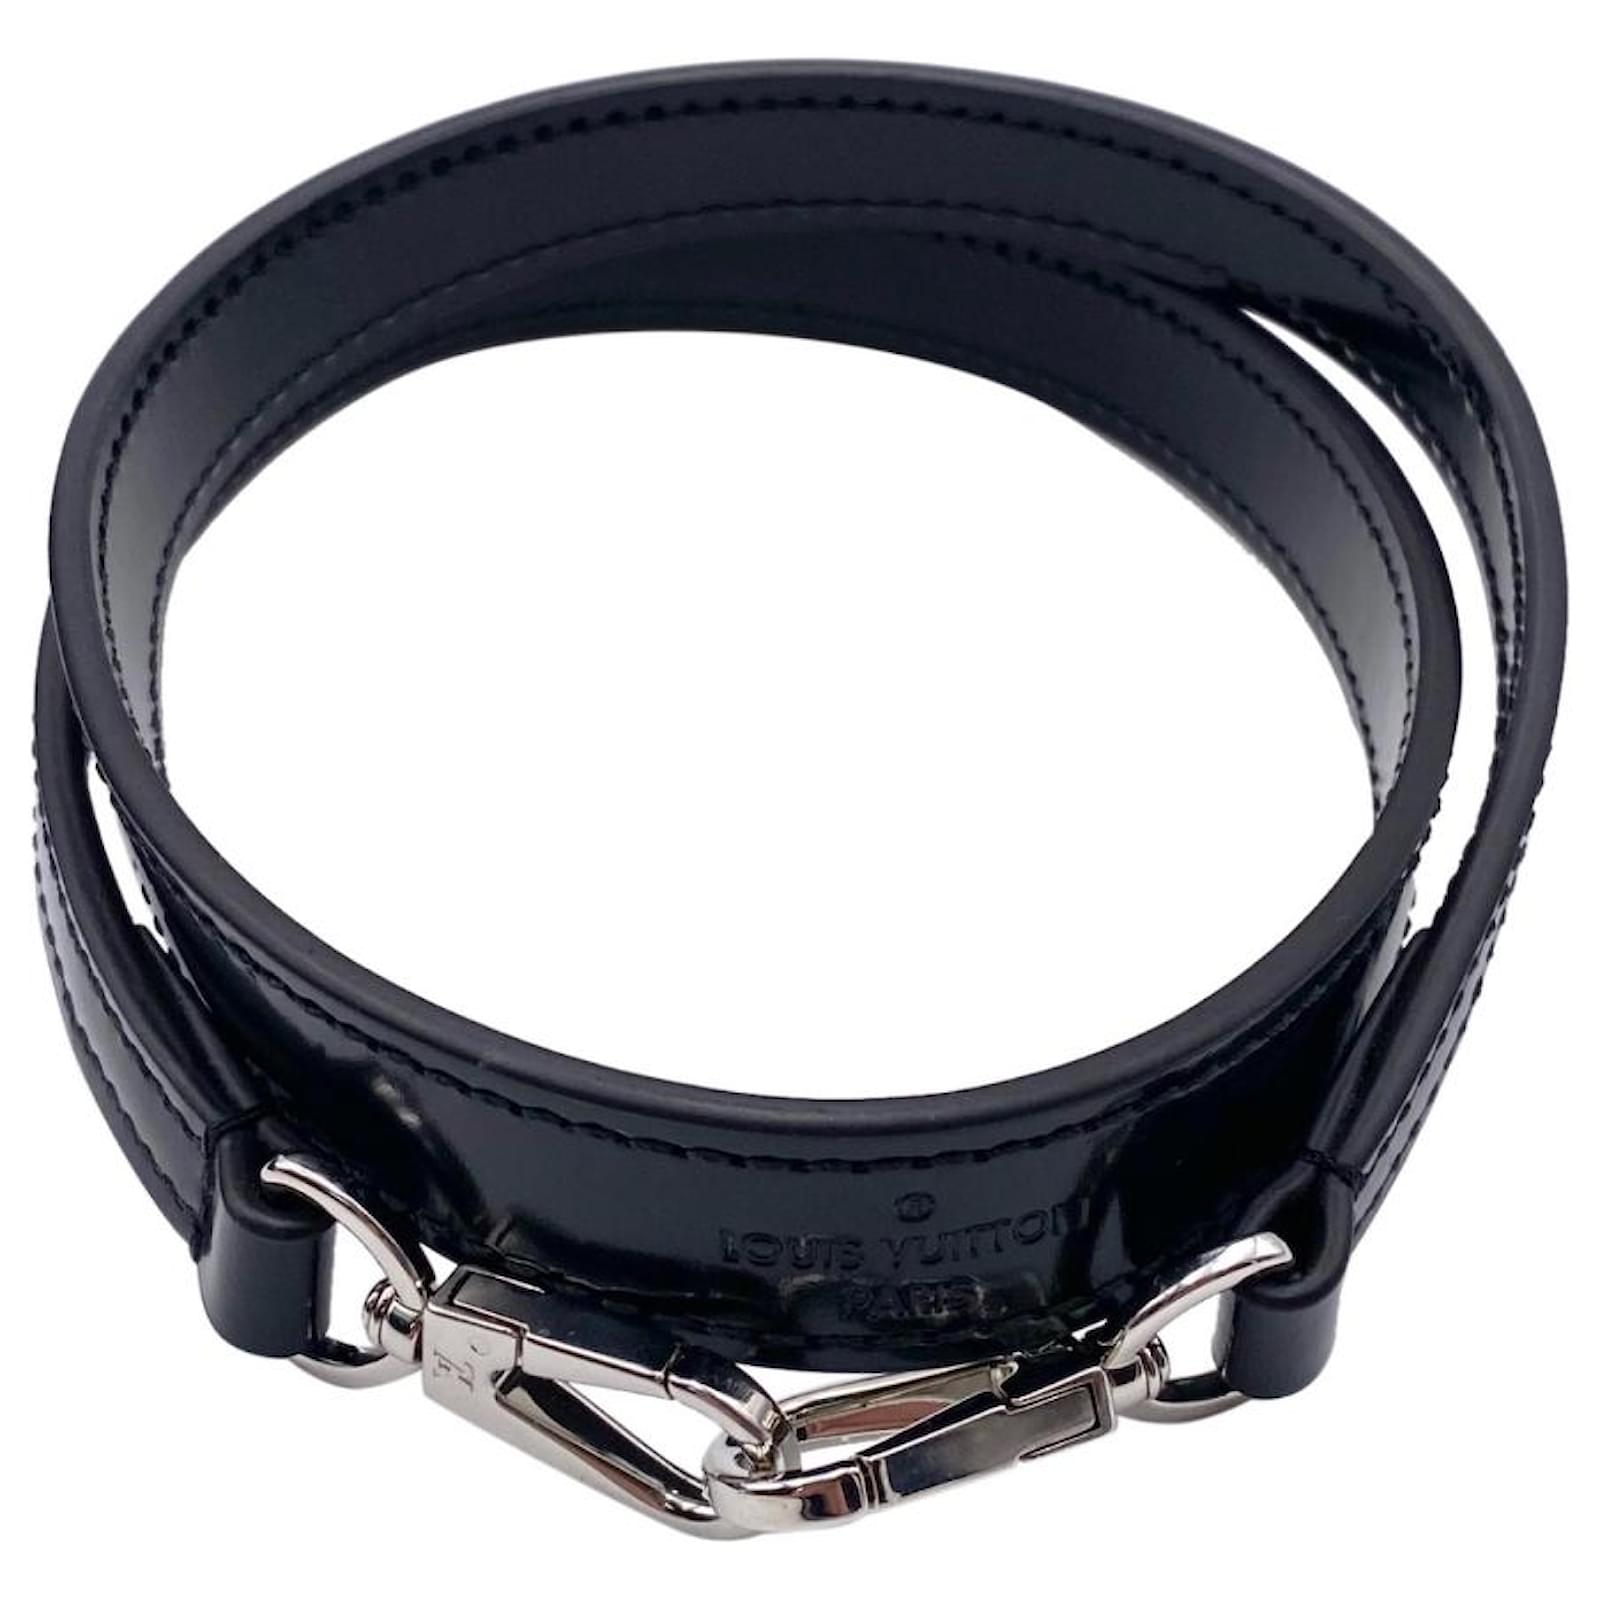 Louis Vuitton 16mm Leather Strap